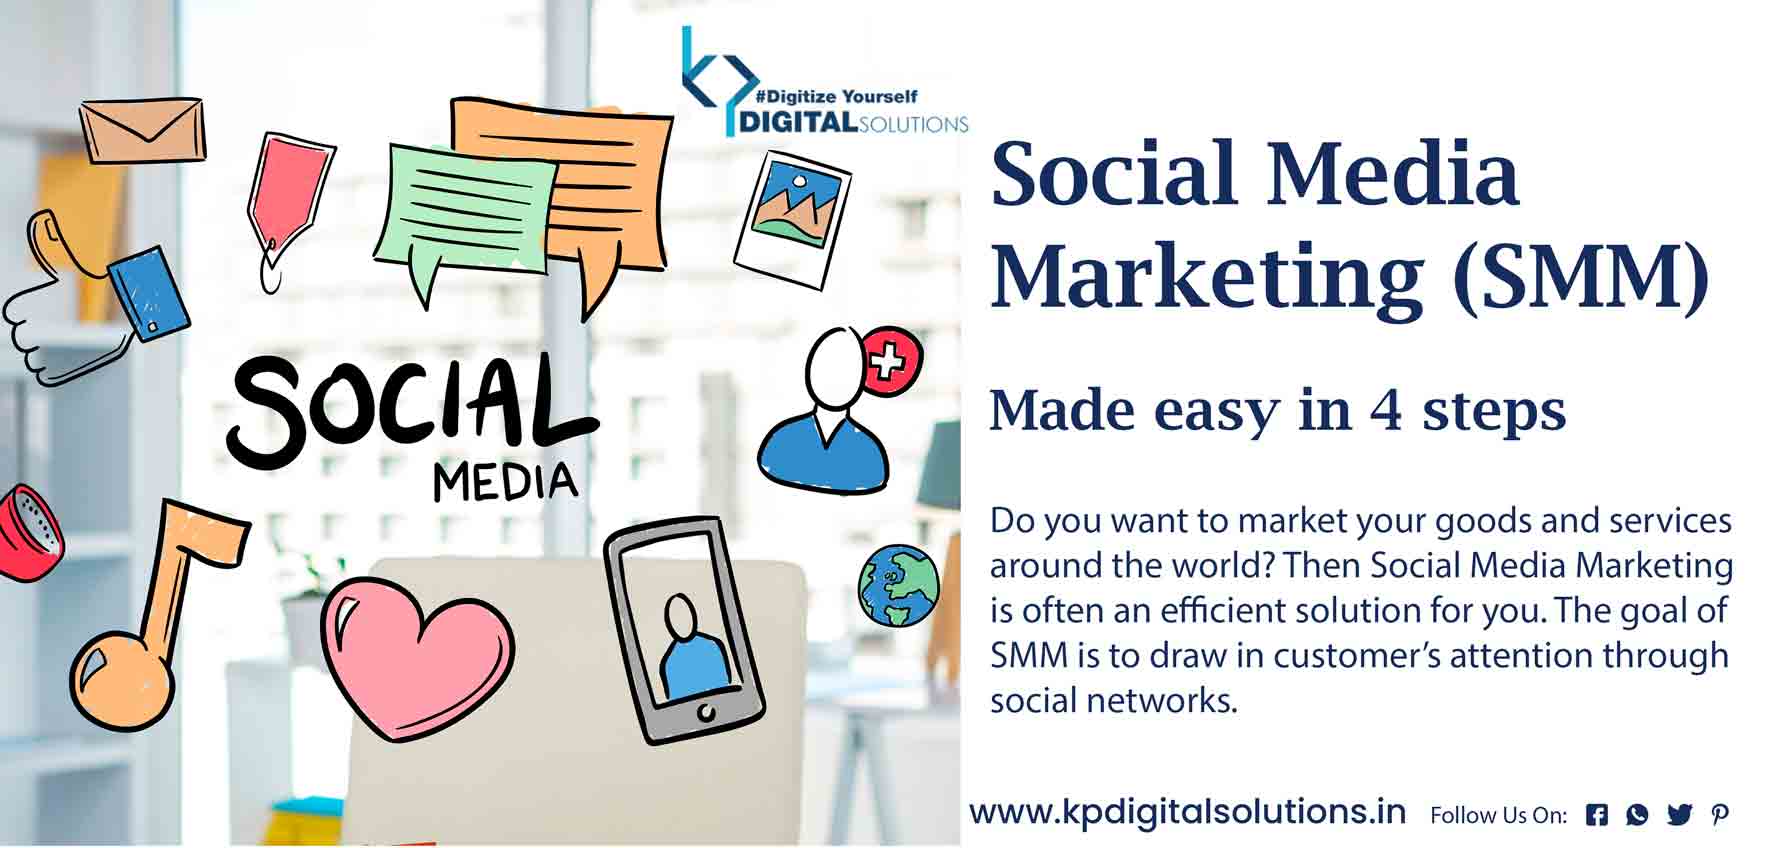 Social Media Marketing (SMM) made easy in 4 steps